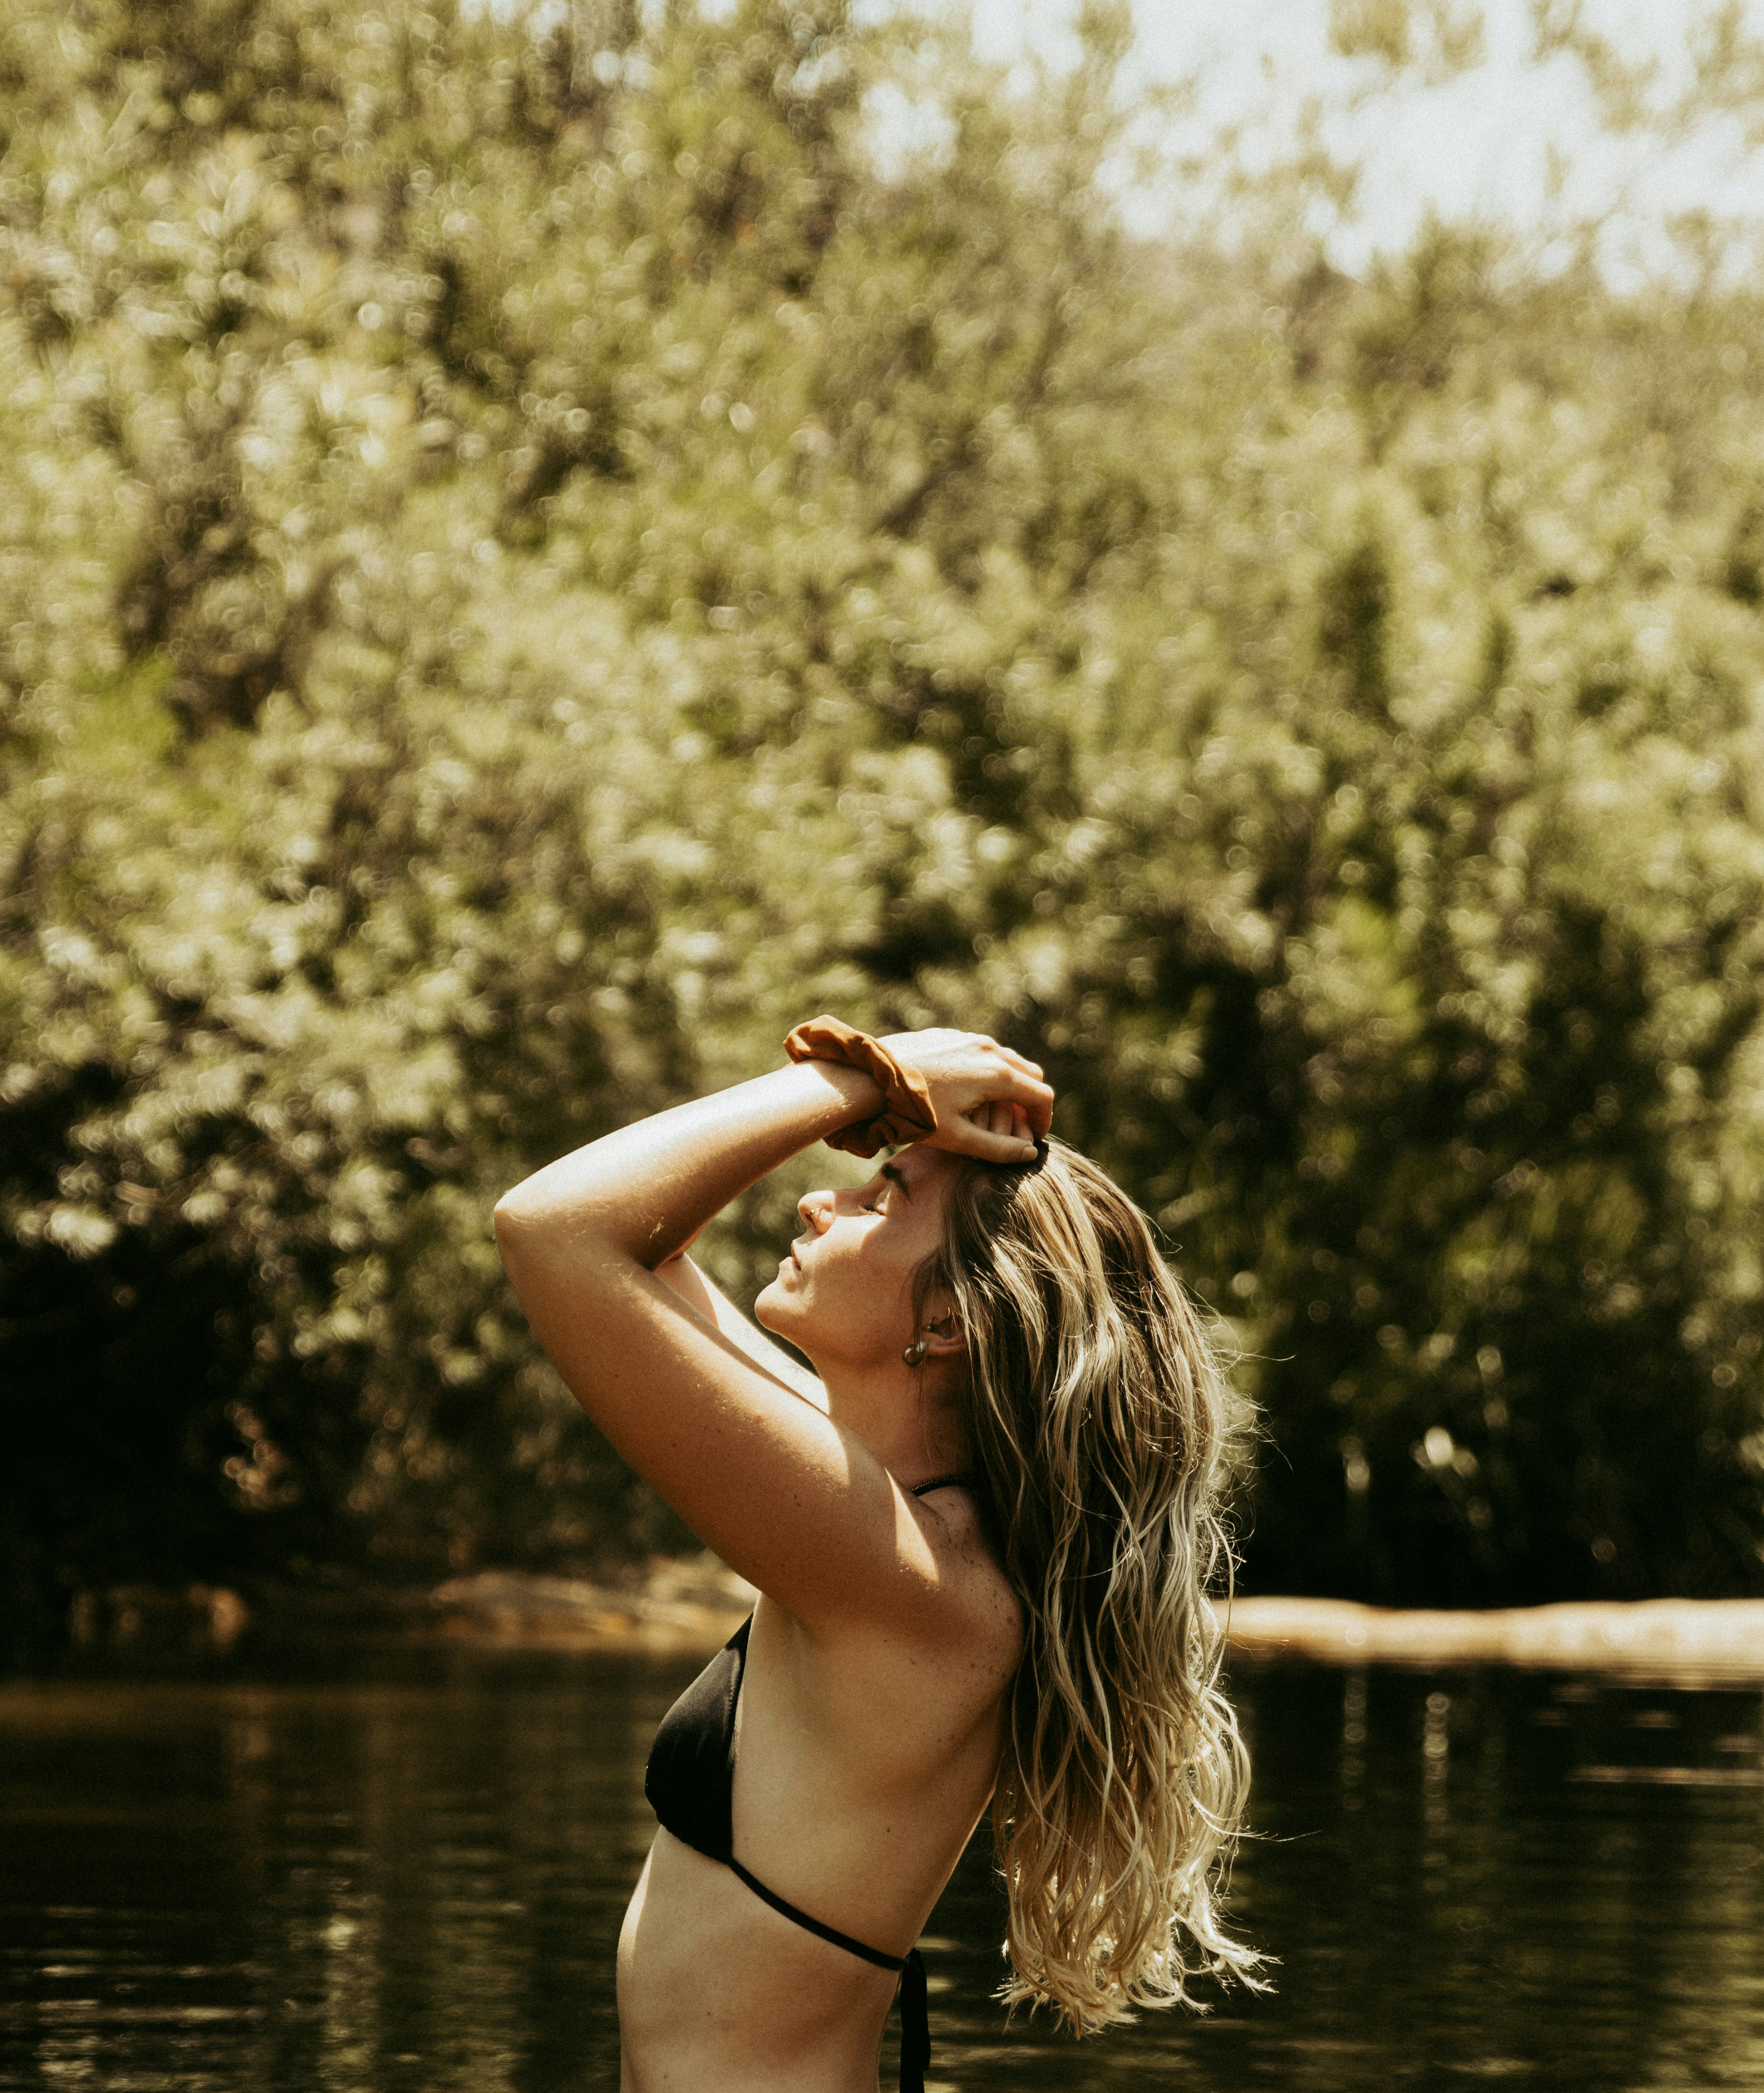 woman in black bikini top raising her right hand near body of water during daytime